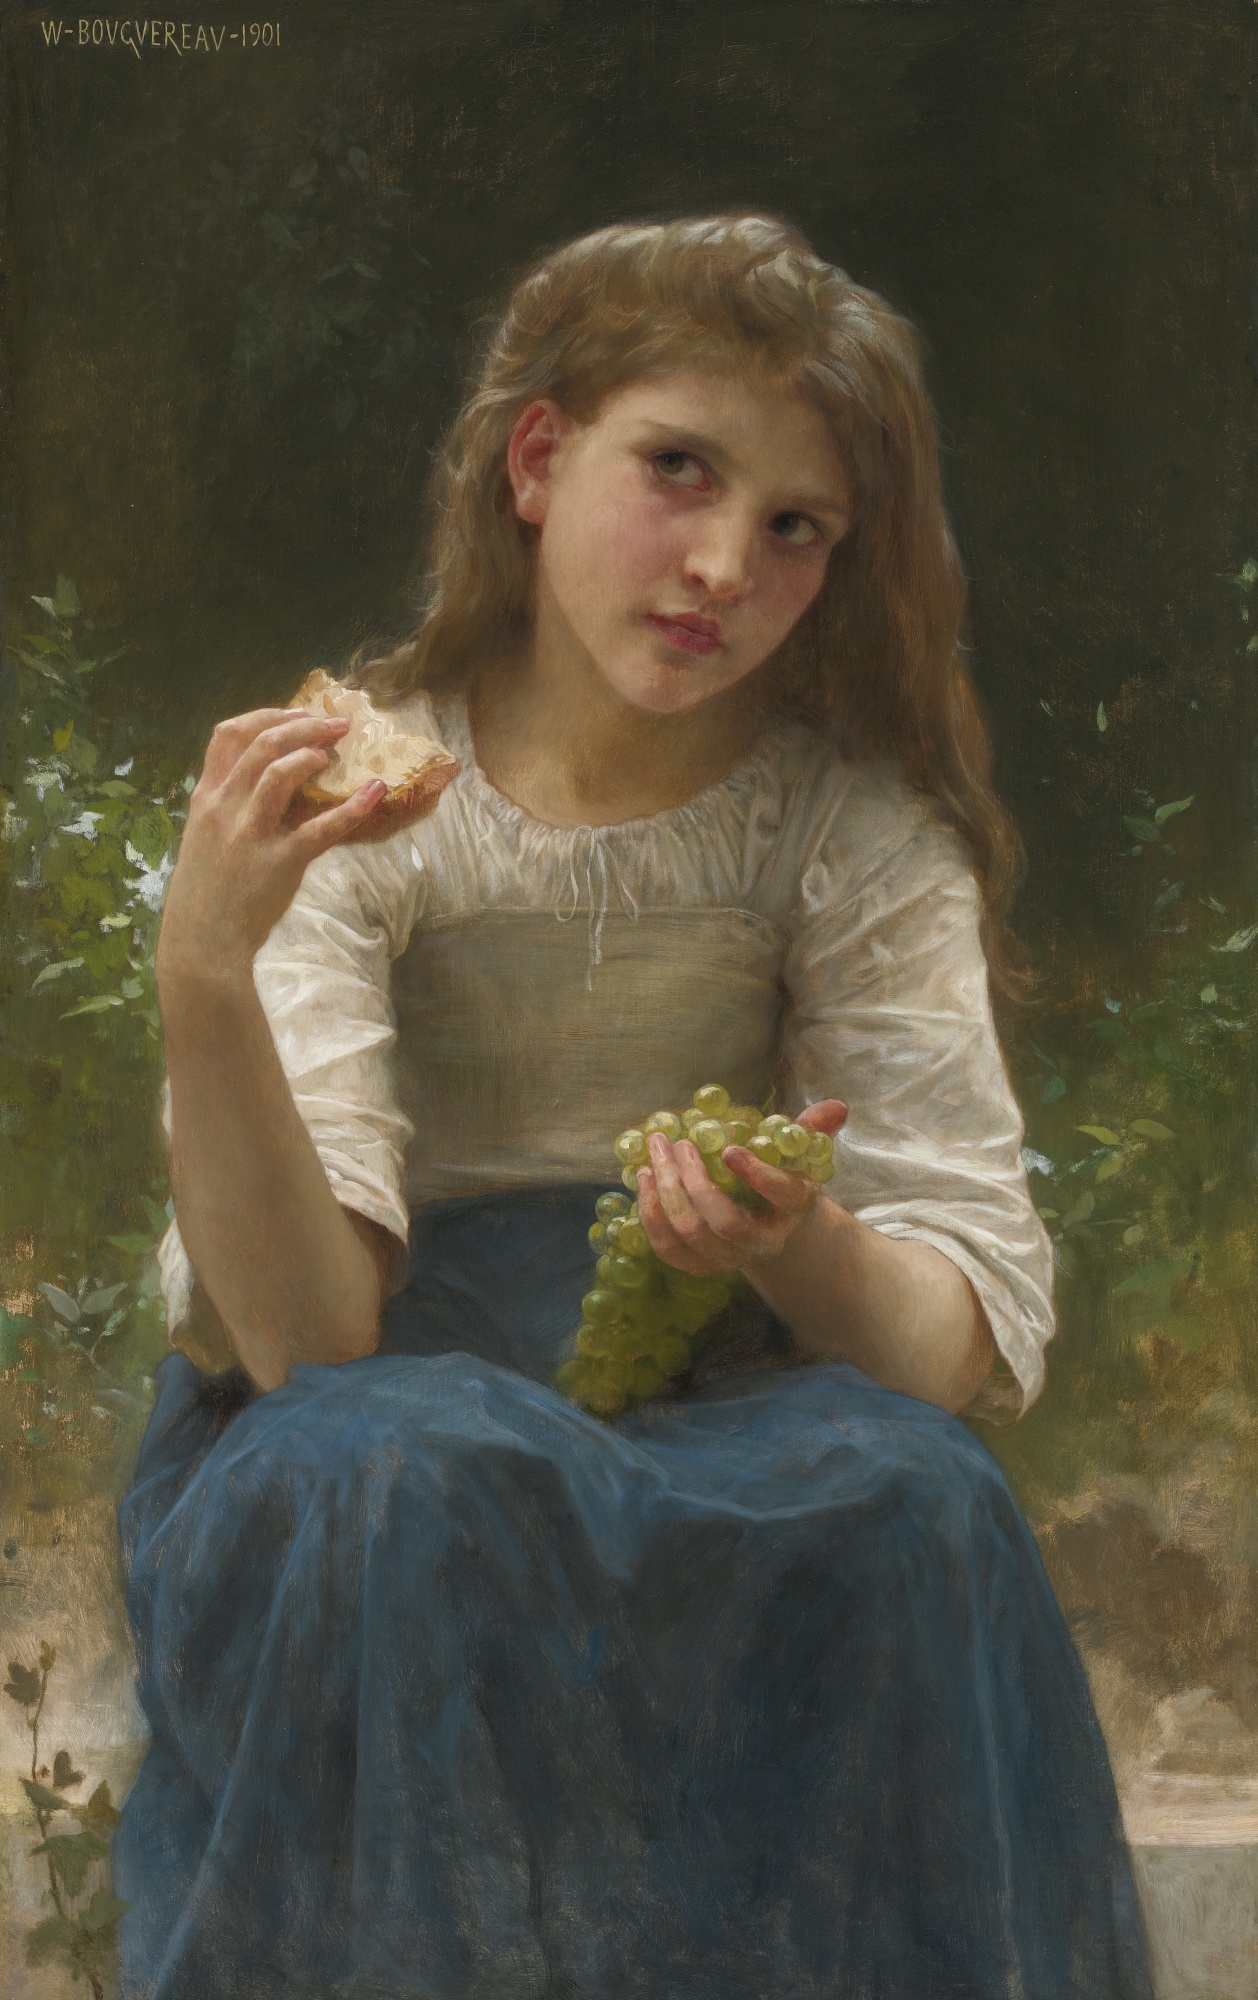 William-Adolphe Bouguereau (1825-1905) - LE GOÛTER (1901)